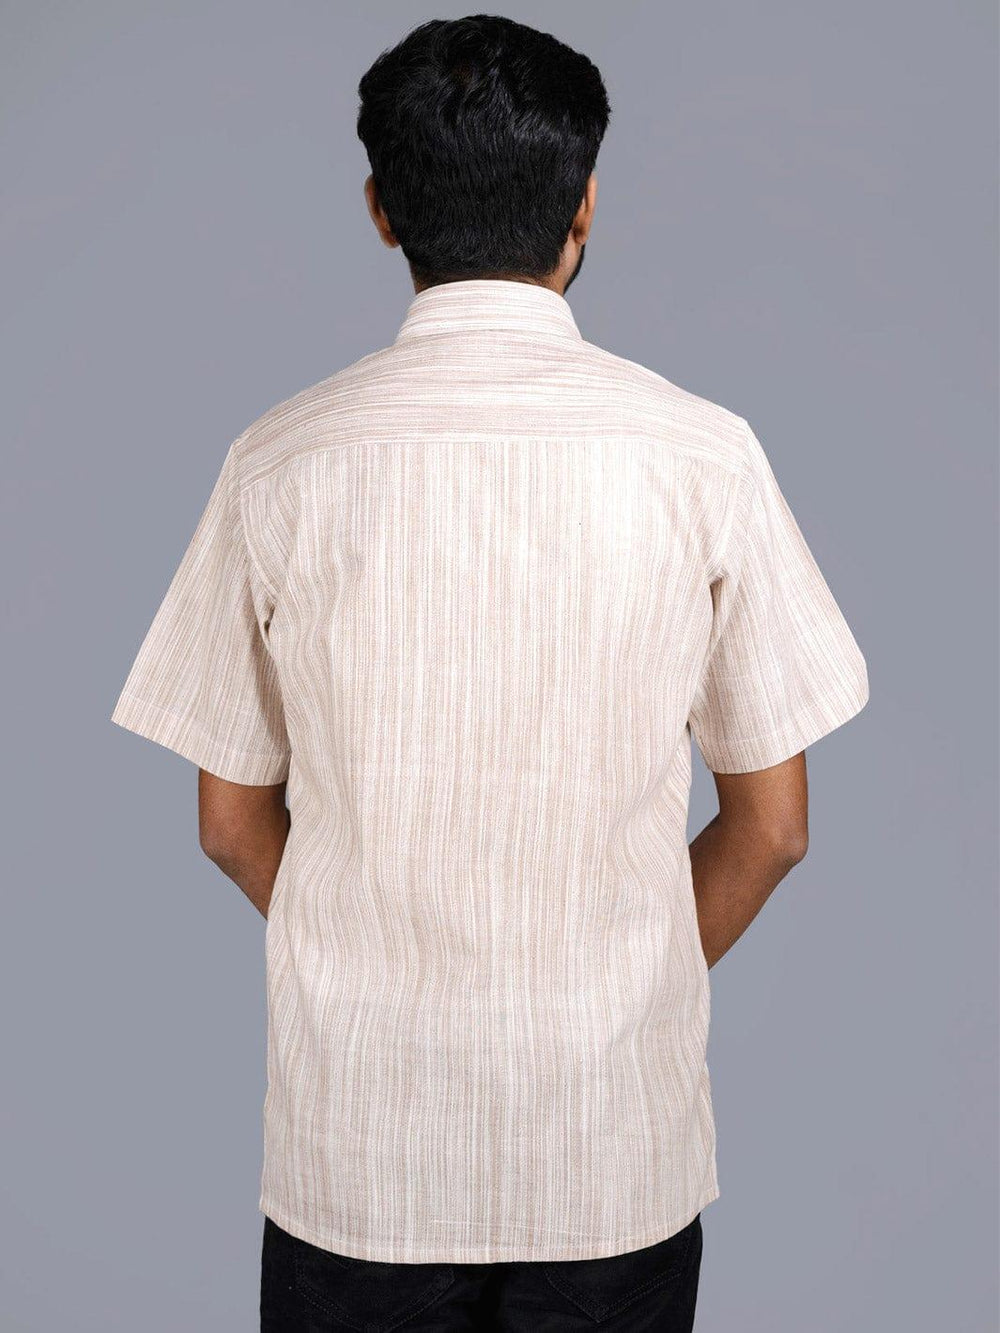 Light Brown Springs Handwoven Cotton Men Shirt - WeaversIndia